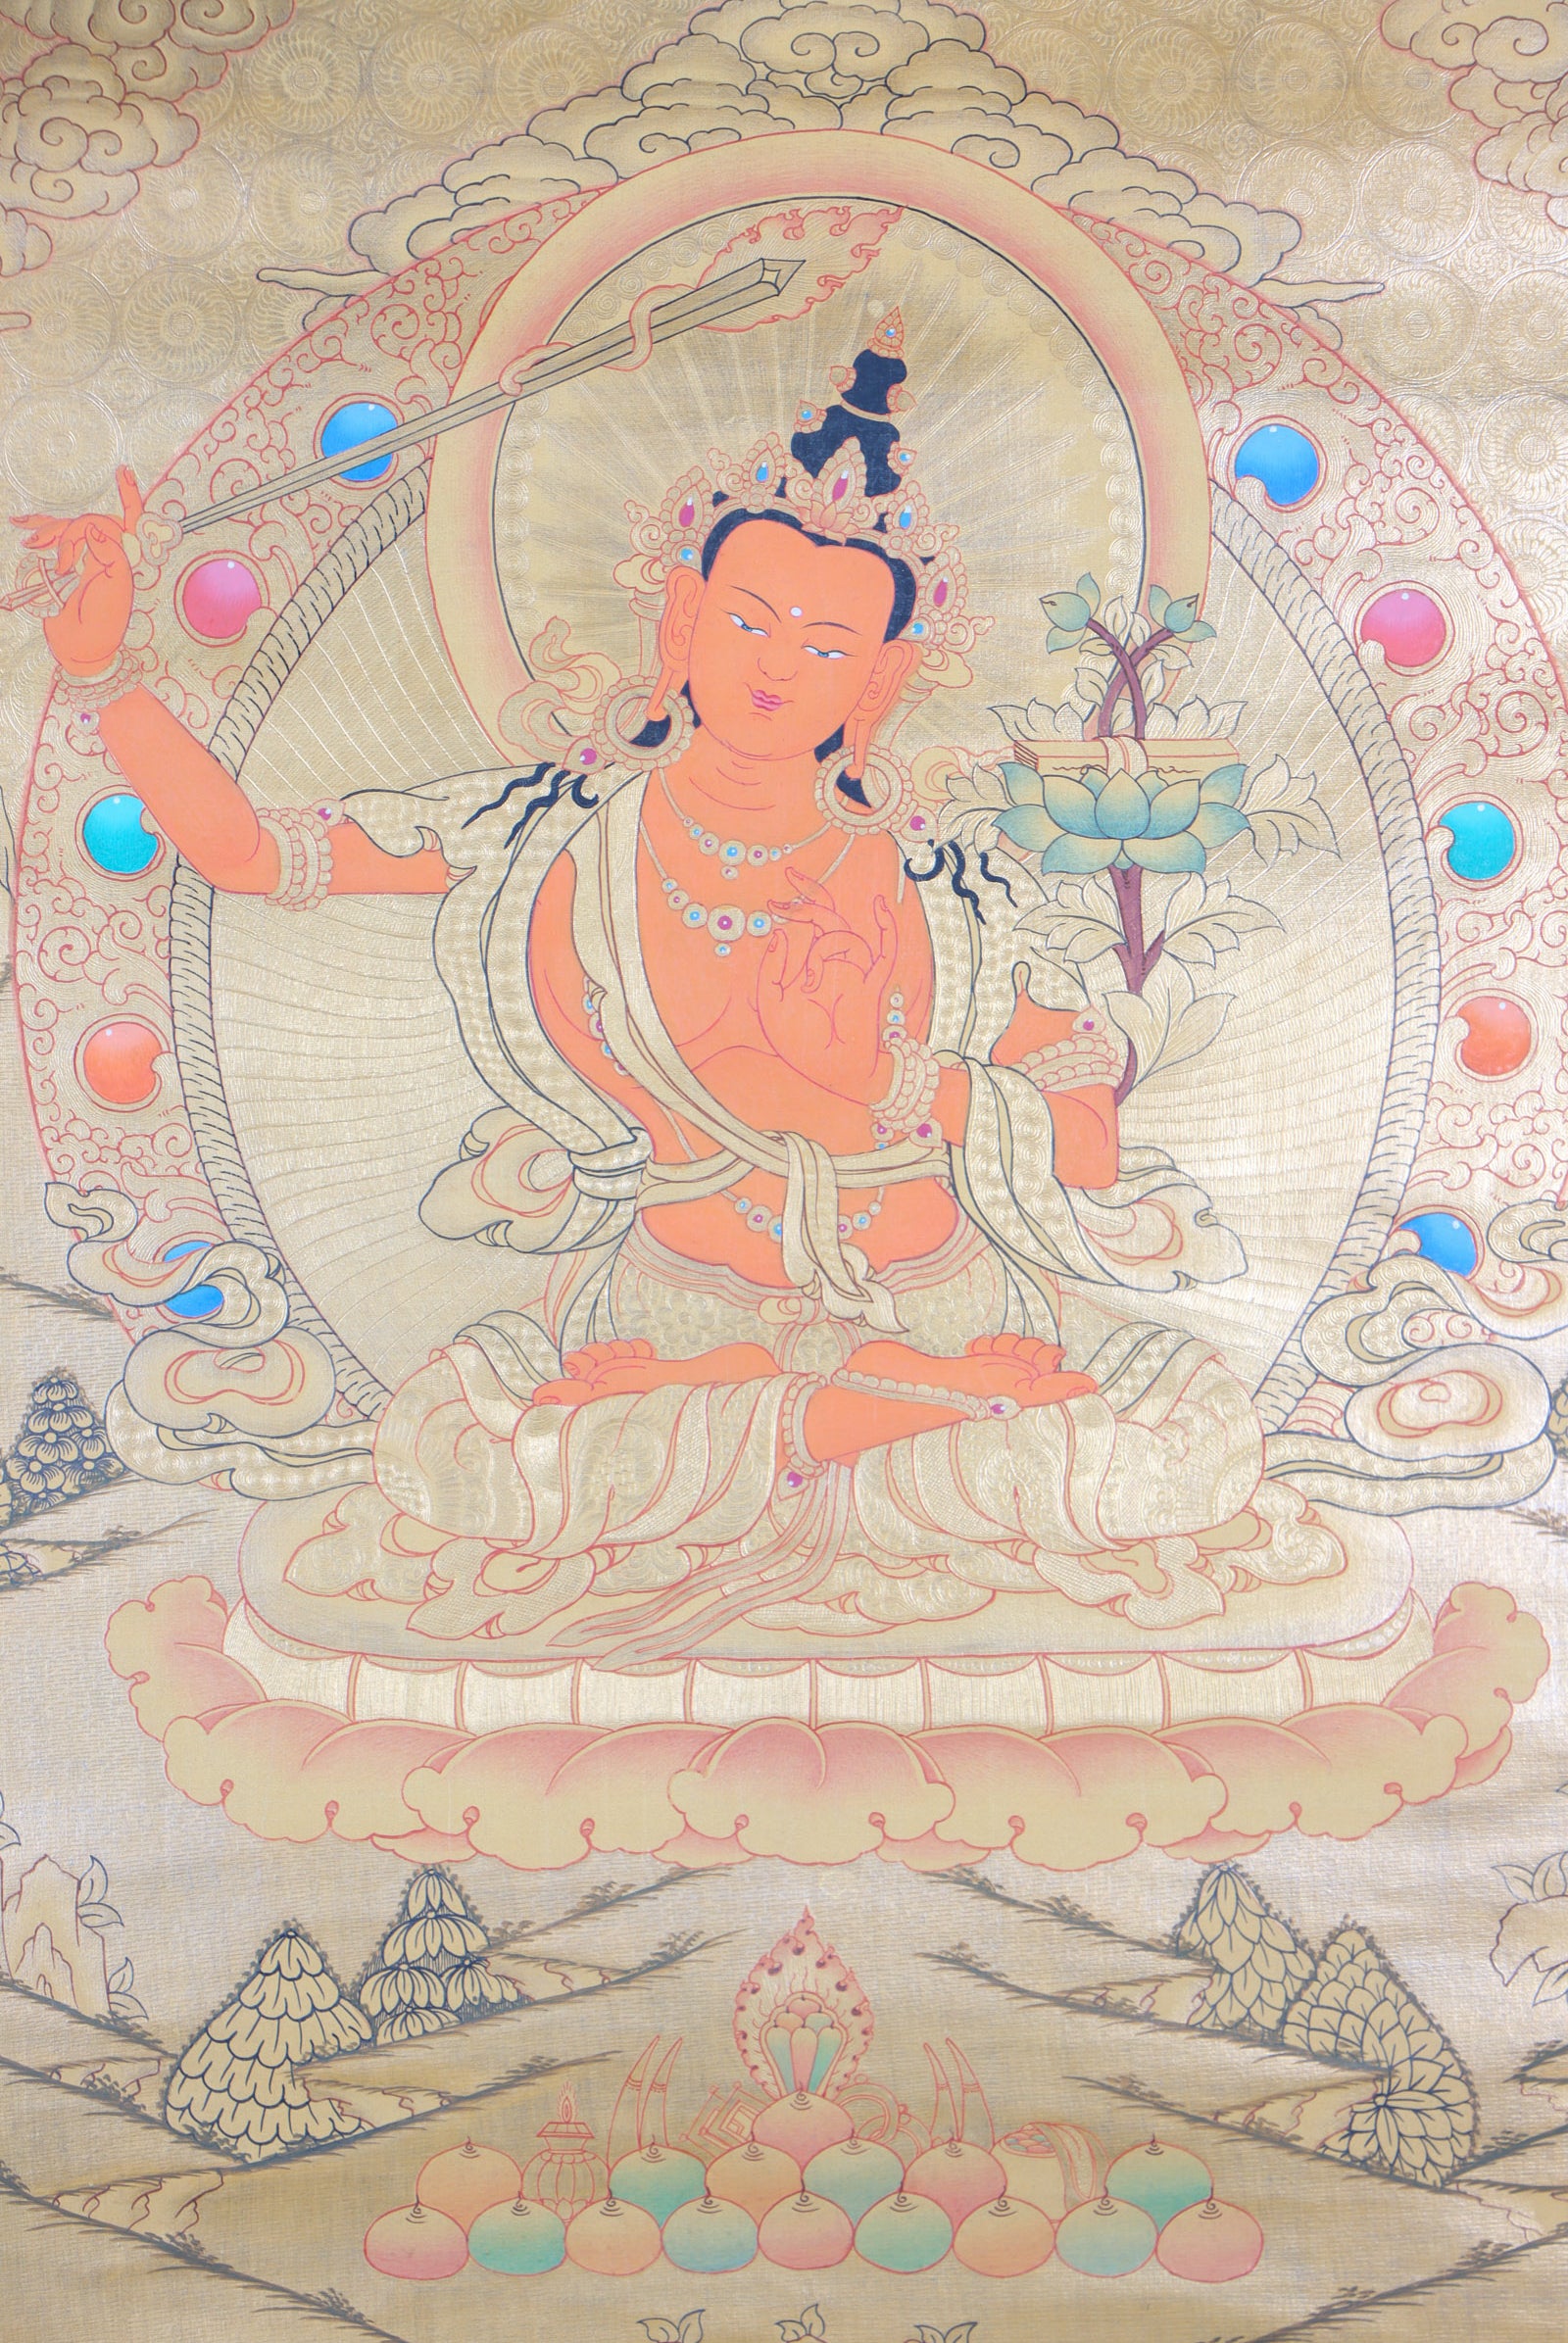 Manjushri Thangka Painting for knowledge and wisdom.